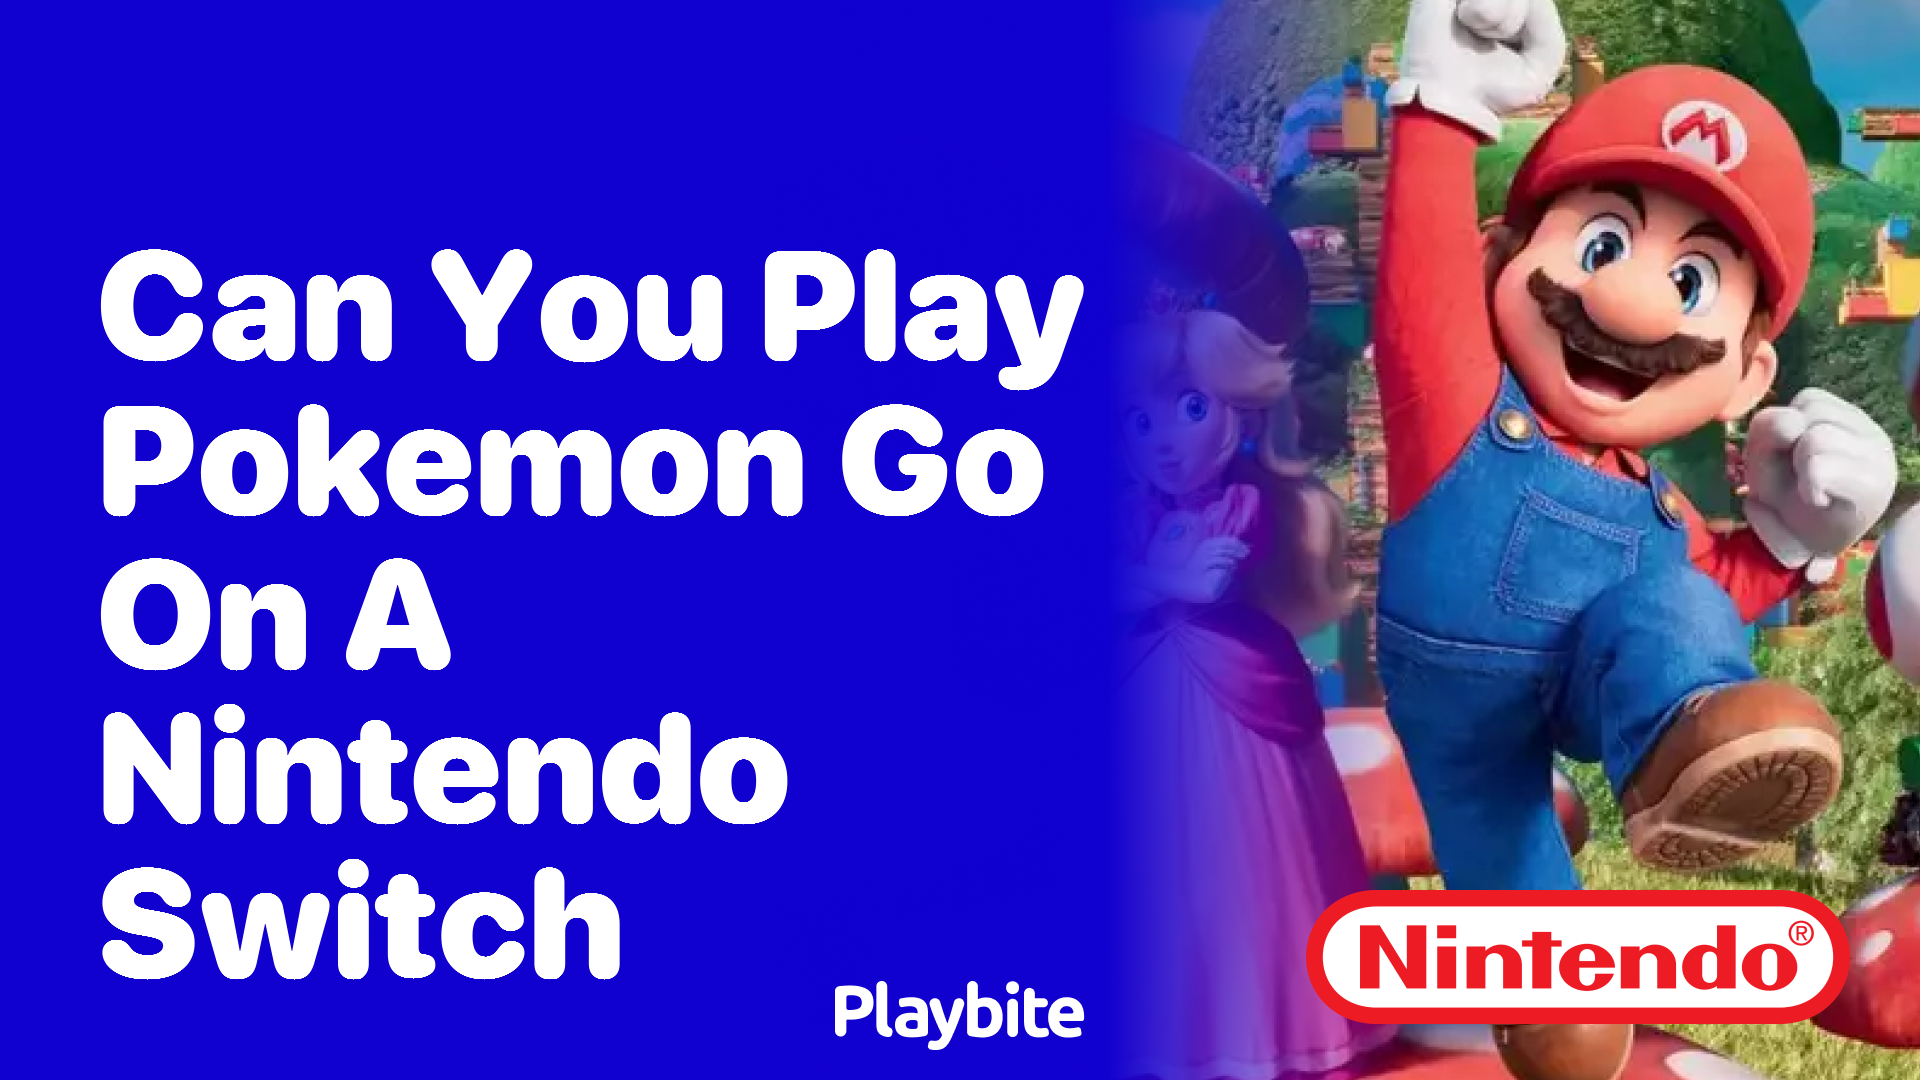 Can You Play Pokémon Go on a Nintendo Switch? - Playbite